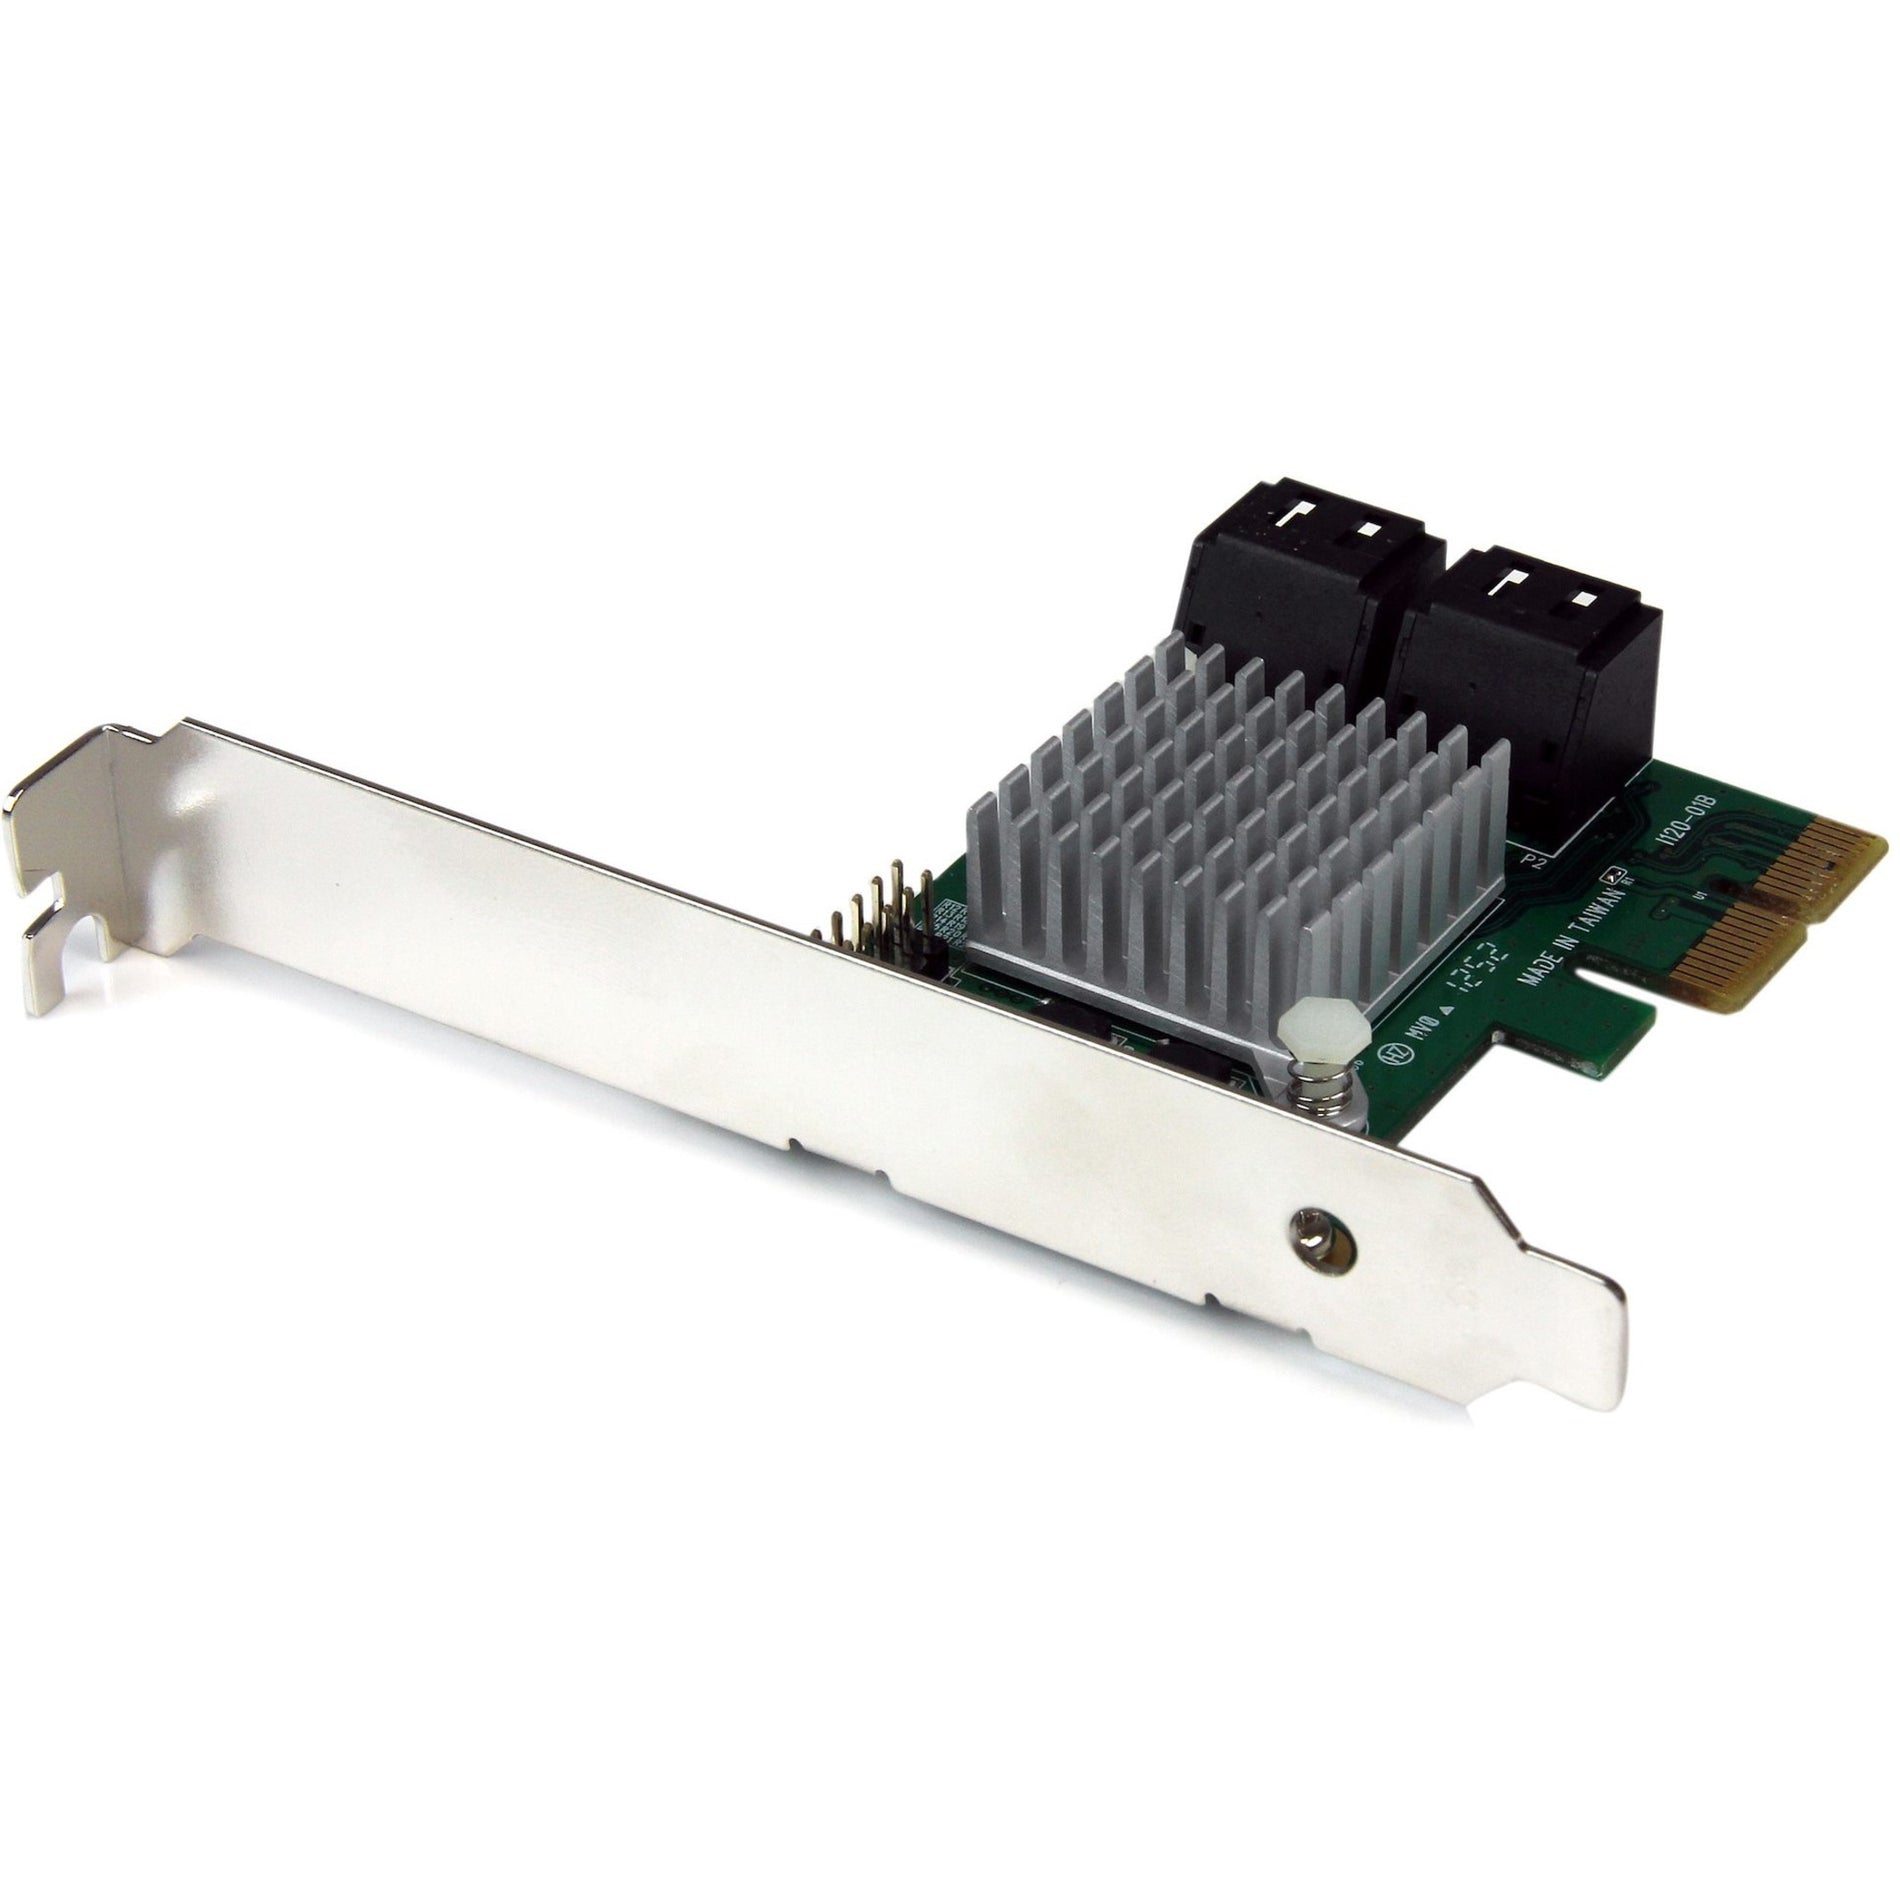 StarTech.com PEXSAT34RH 4 Port PCI Express SATA III 6Gbps RAID Controller Card with Heatsink, High-Speed Data Transfer and RAID Support